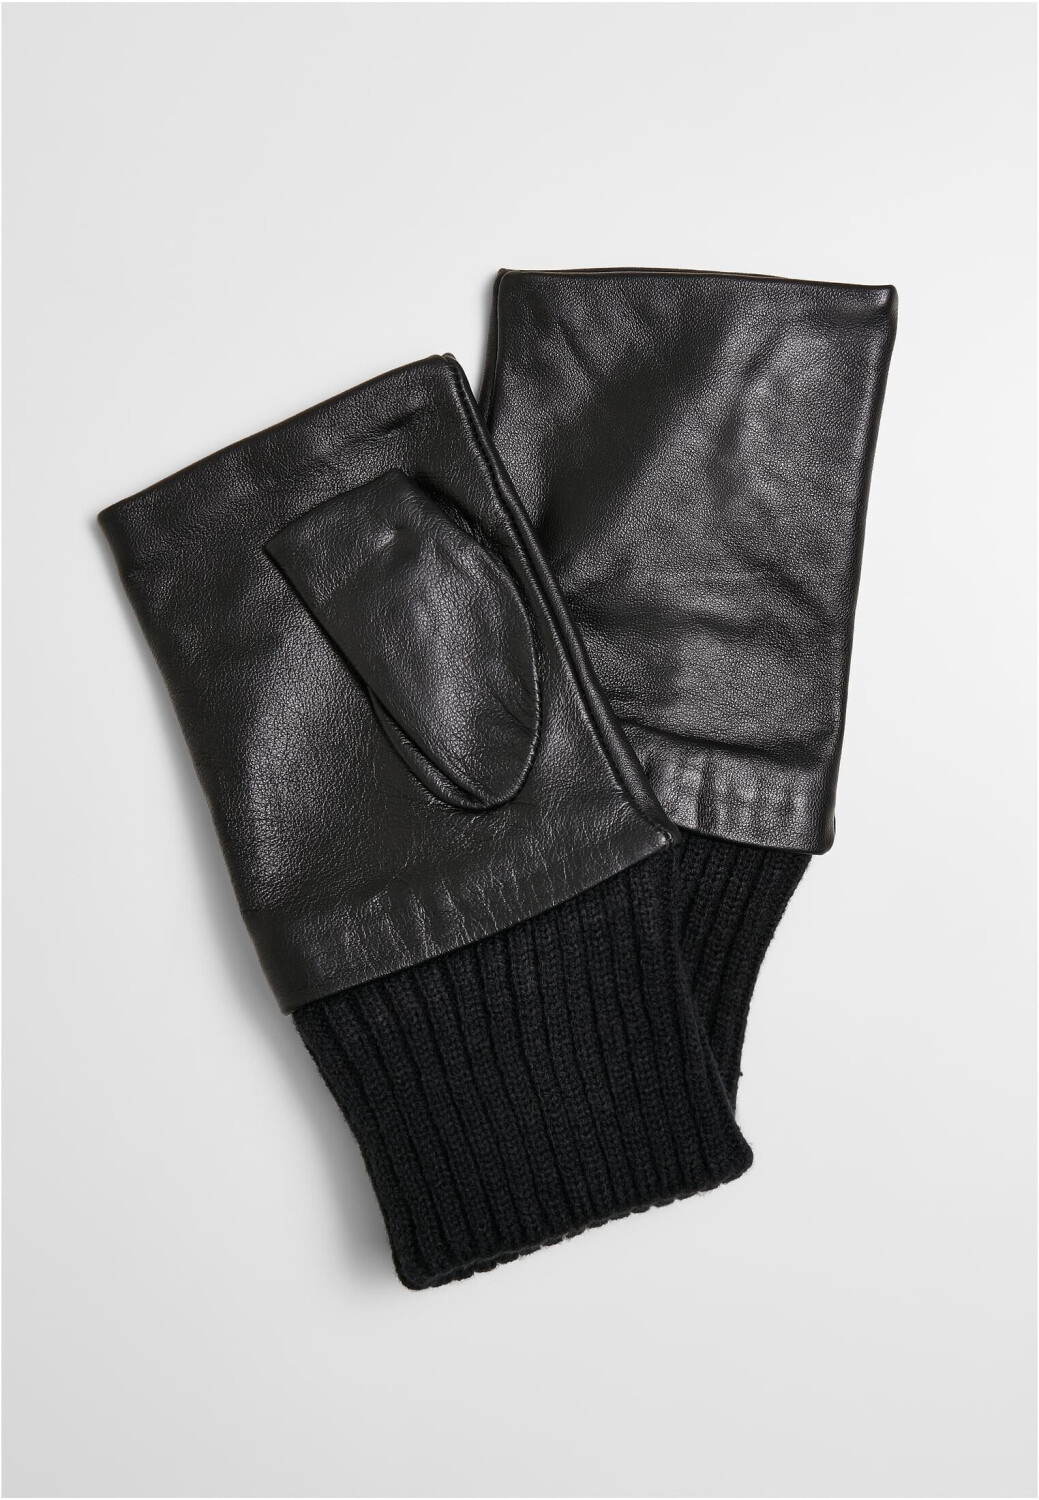 Finger Half 13,59 black € | Leather ab Synthetic Urban bei Preisvergleich (TB4870-00007-0044) Classics Gloves